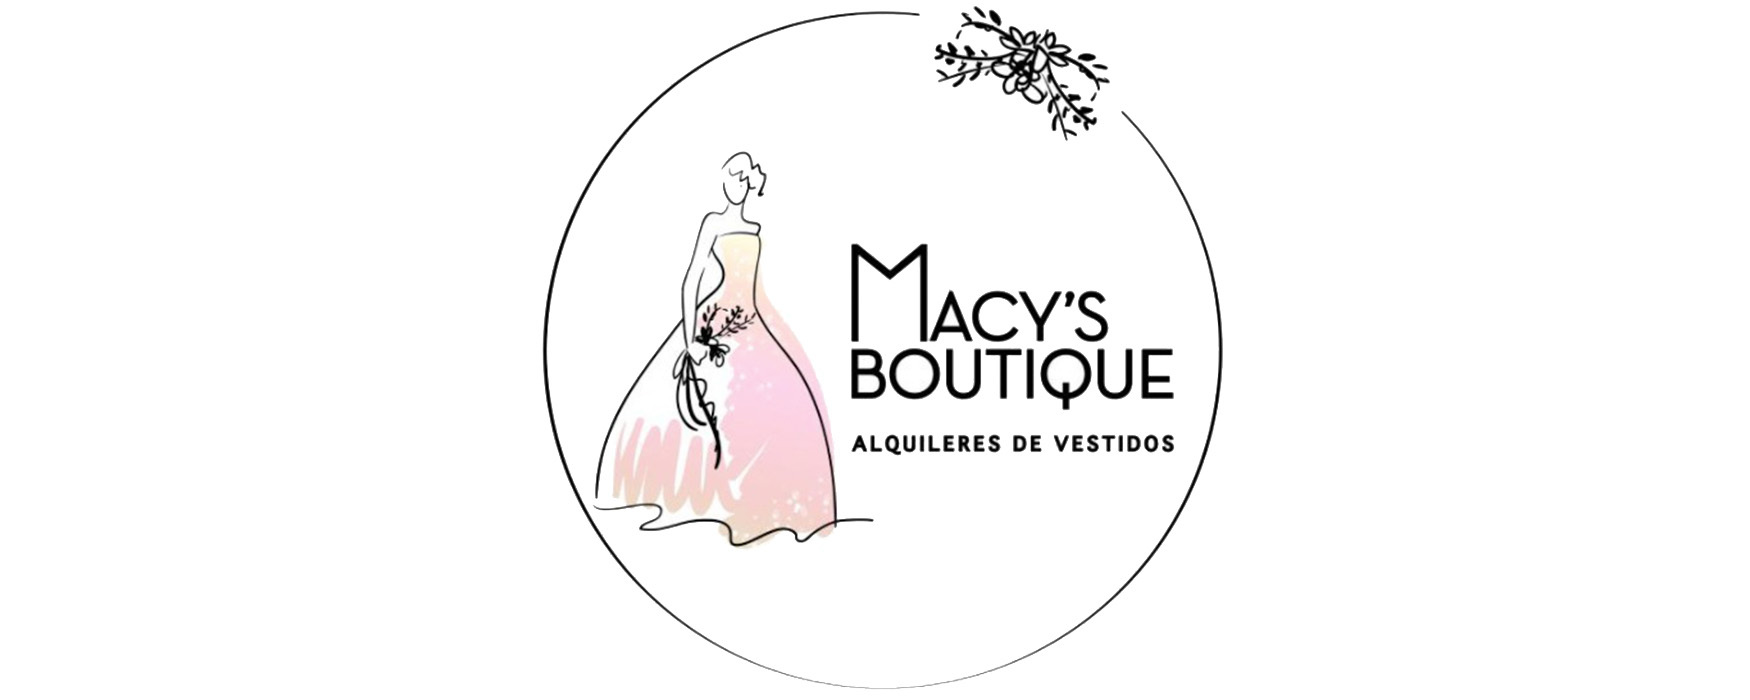 Macy's Boutique Alquileres de Vestidos